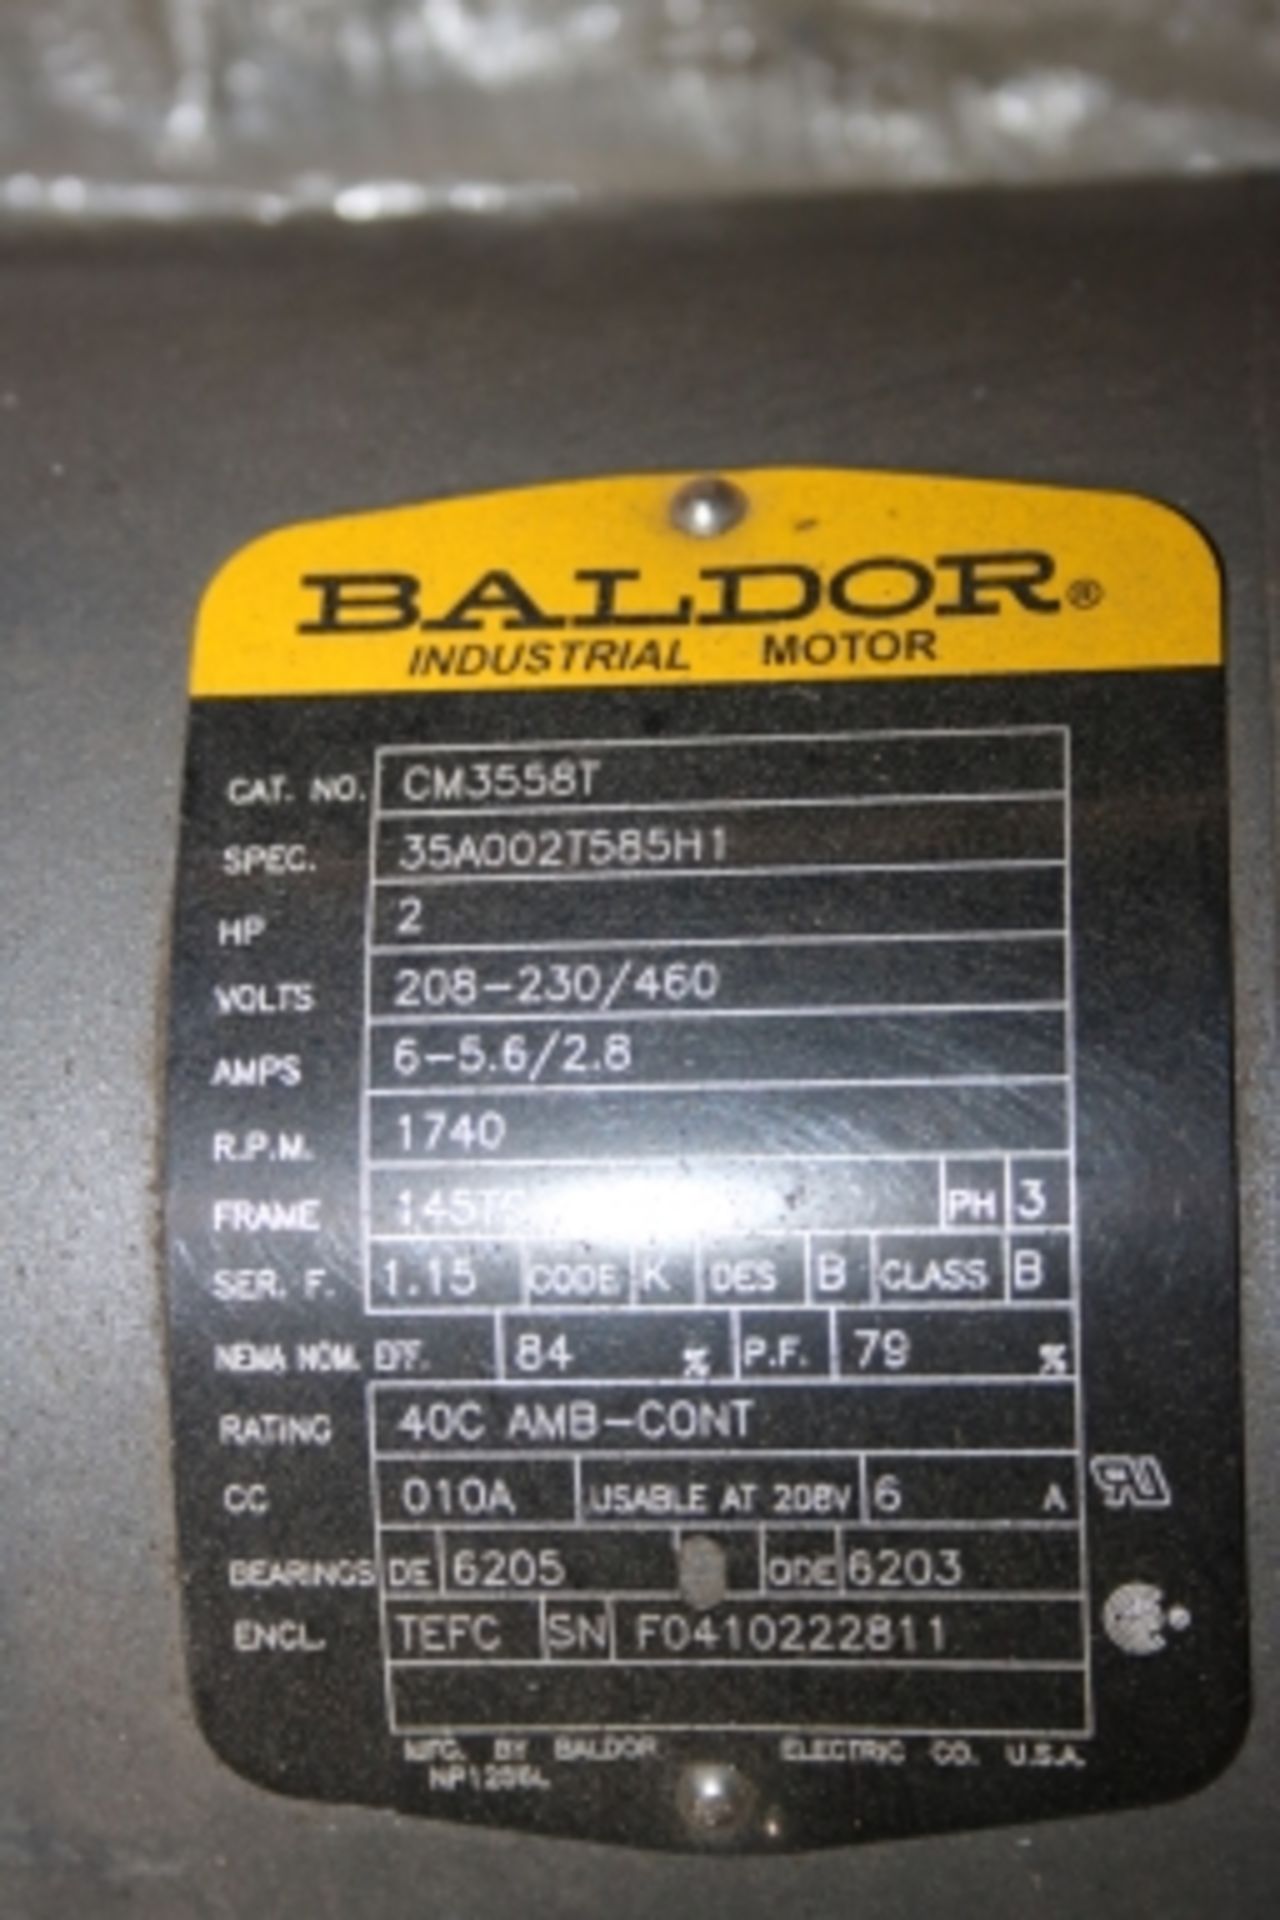 NEW - Baldor Industrial Motor, 2hp/1740 rpm - Image 2 of 8